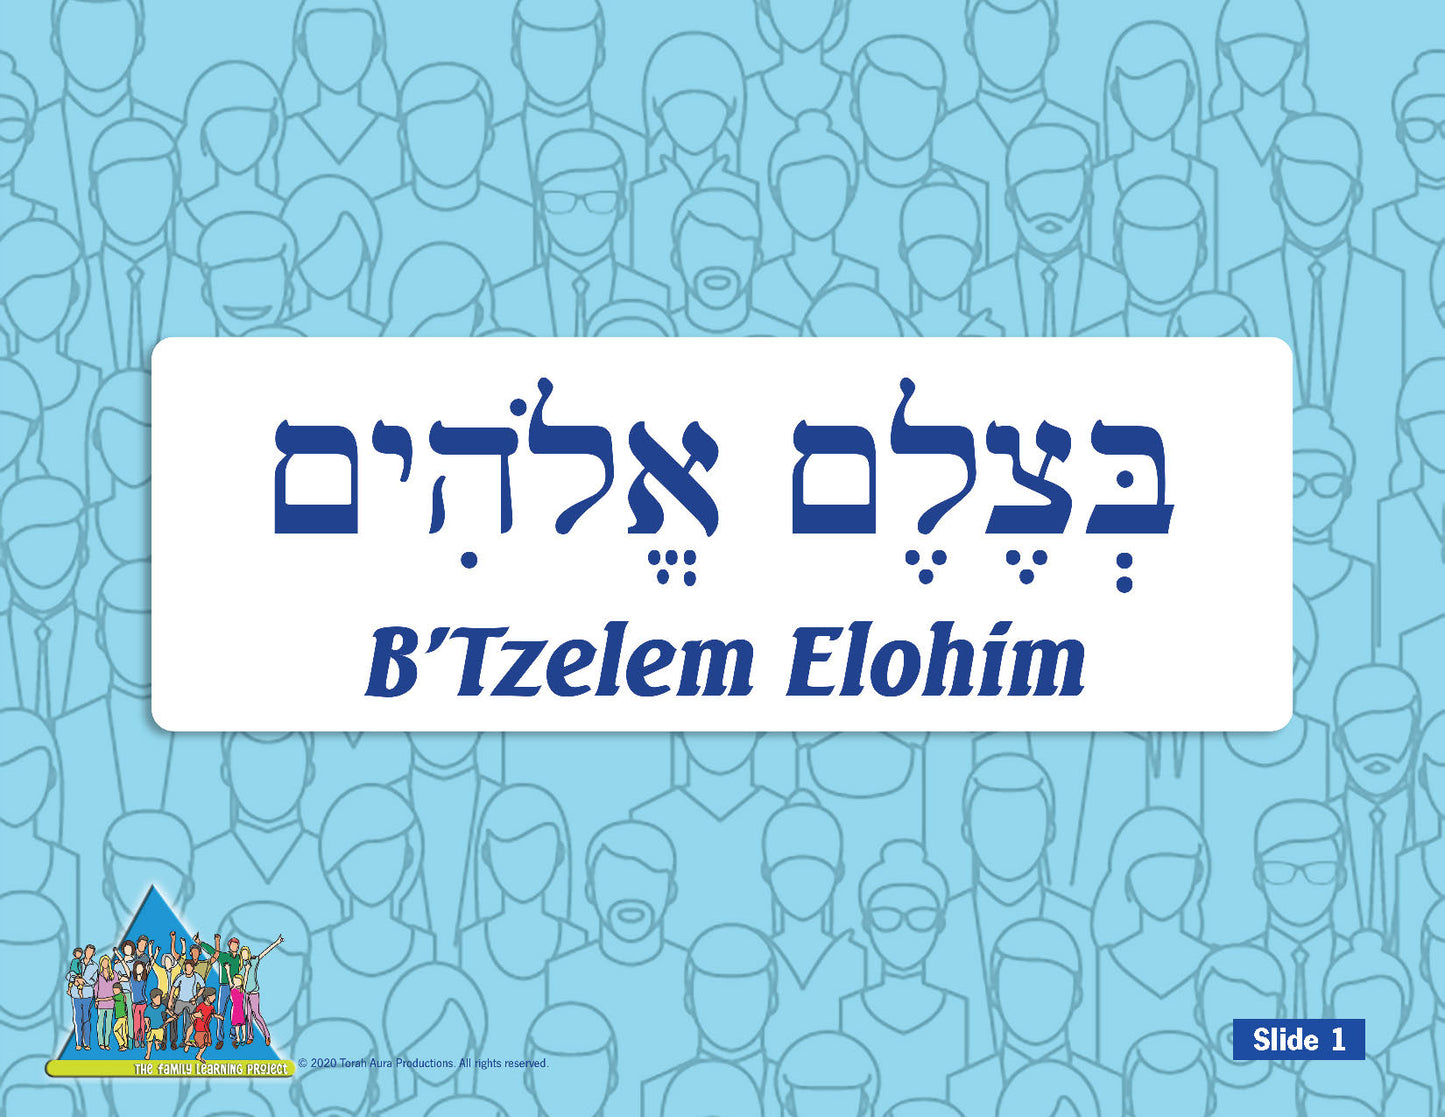 Family Learning Project: B'Tzelem Elohim—In God's Image